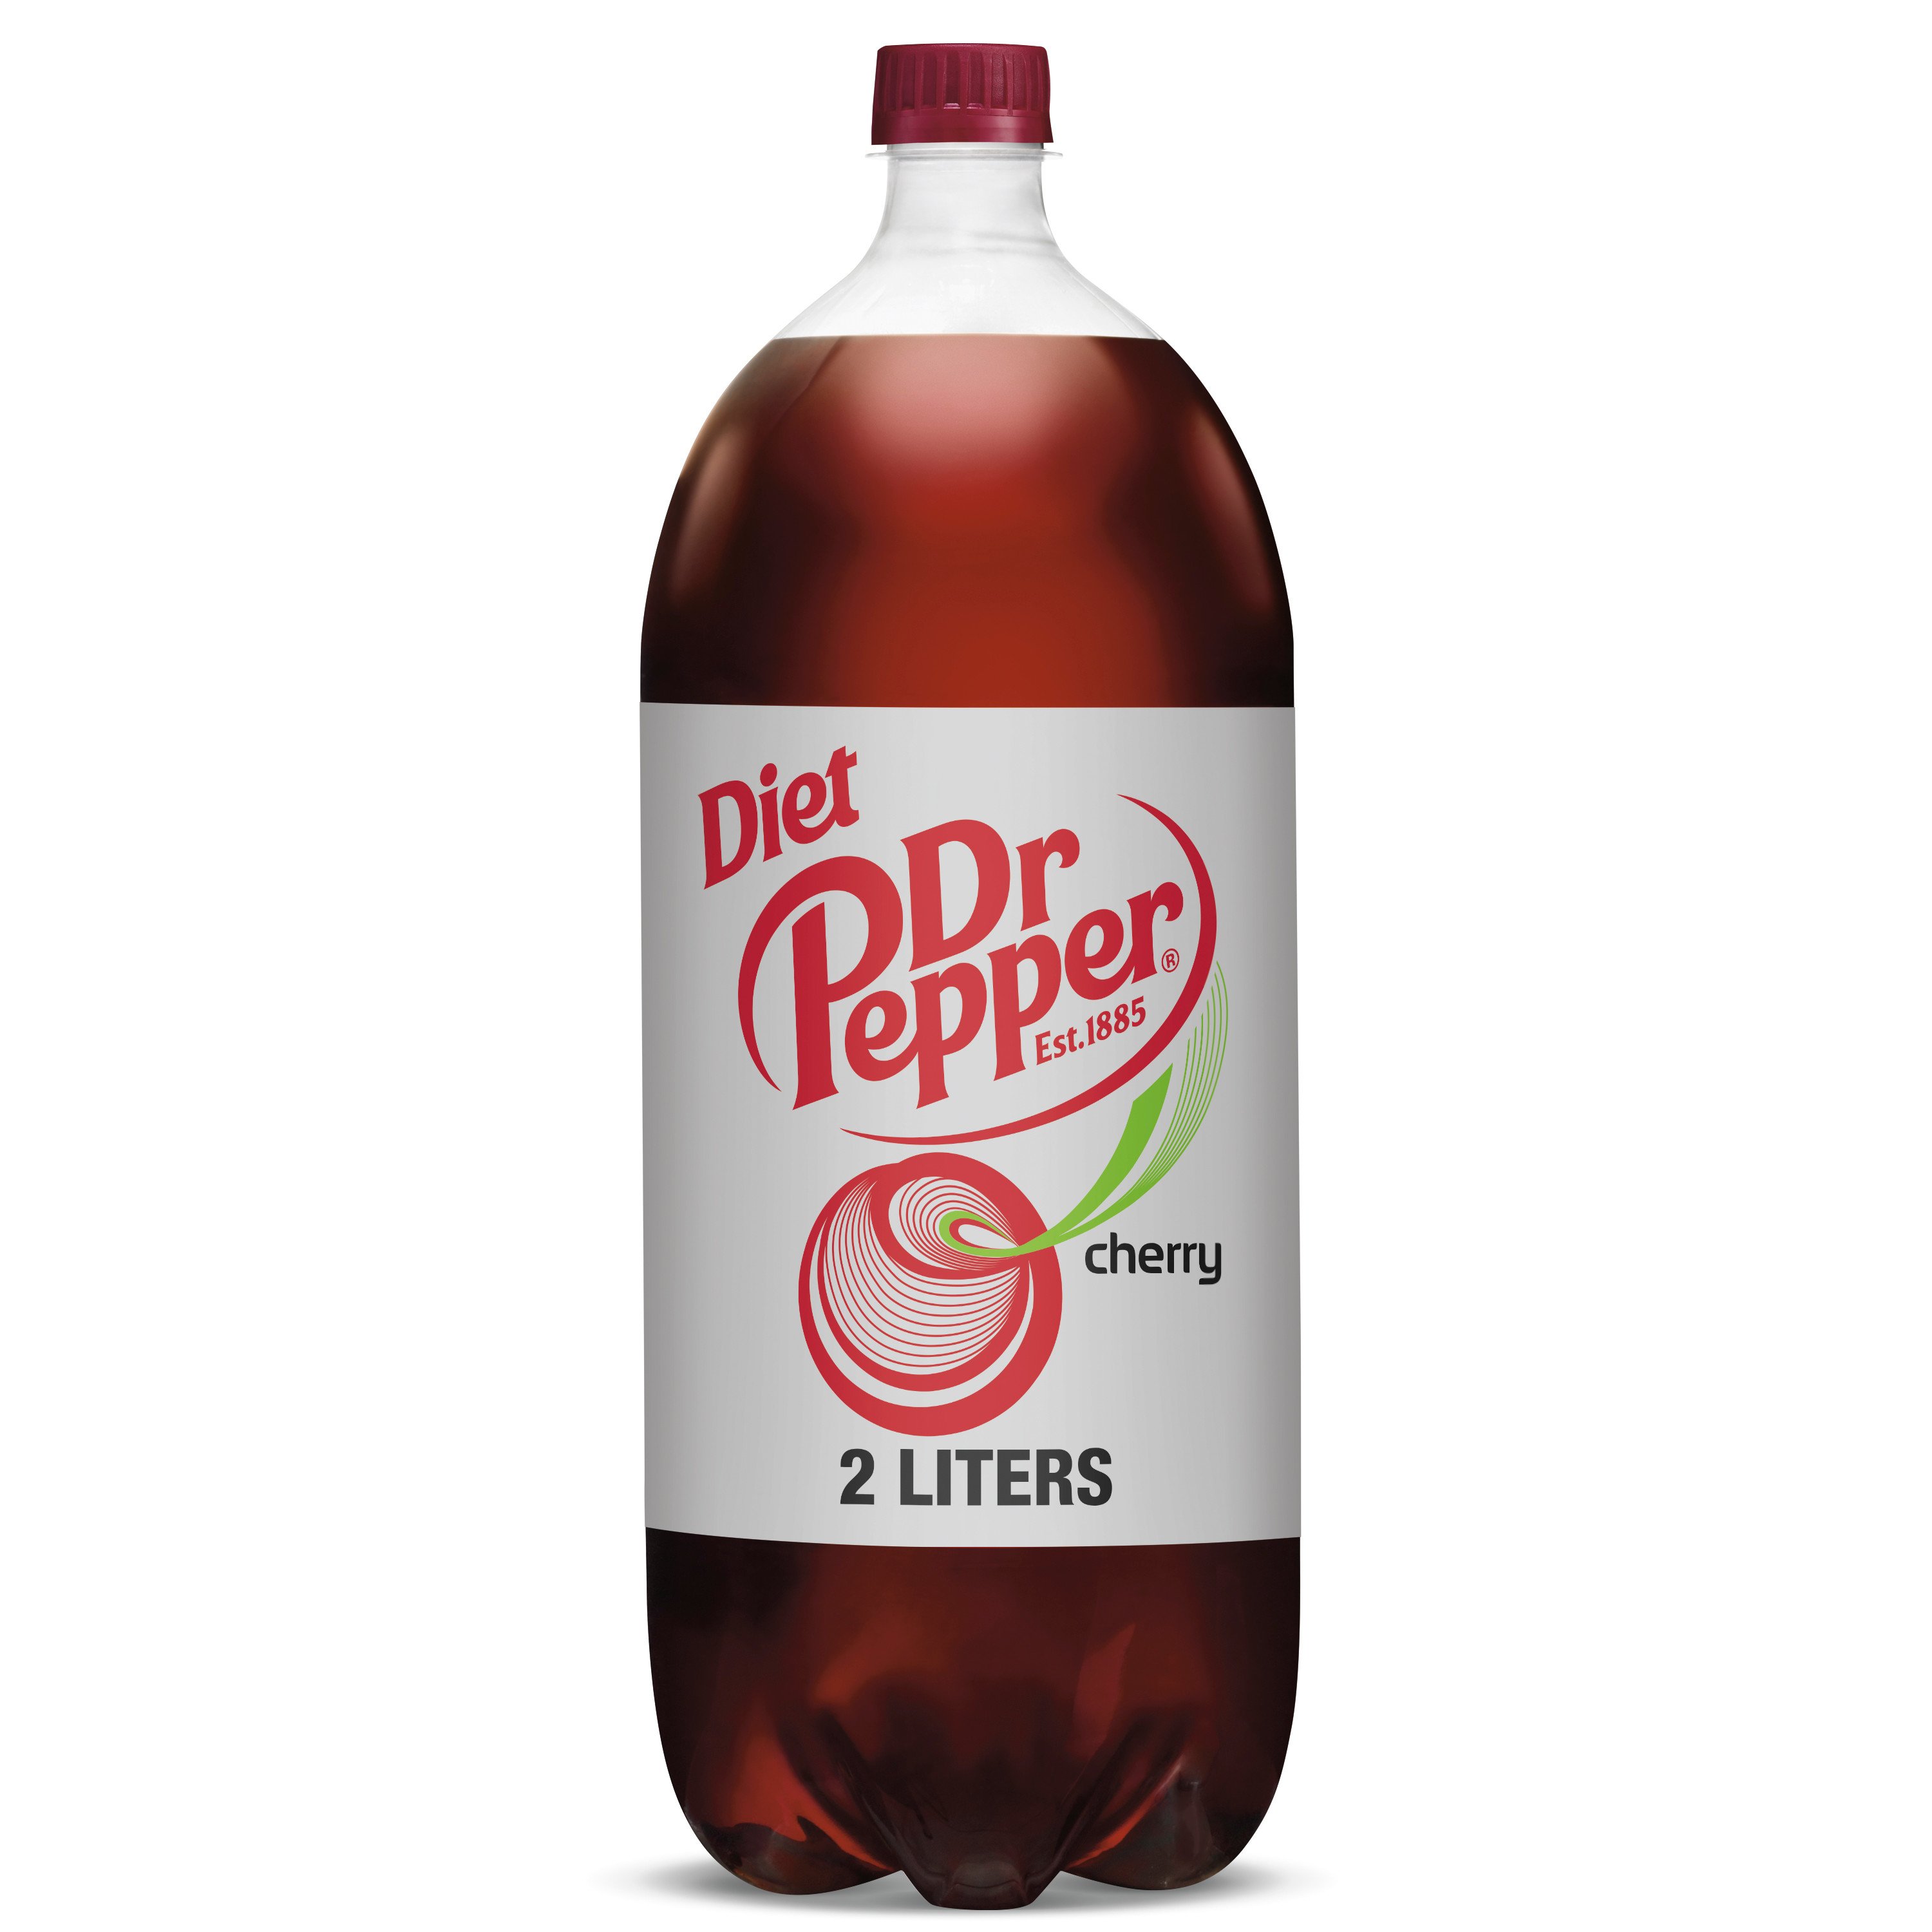 Soda cherry neko. Доктор Пеппер черри. Diet Dr Pepper Cherry. Cherry Soda.